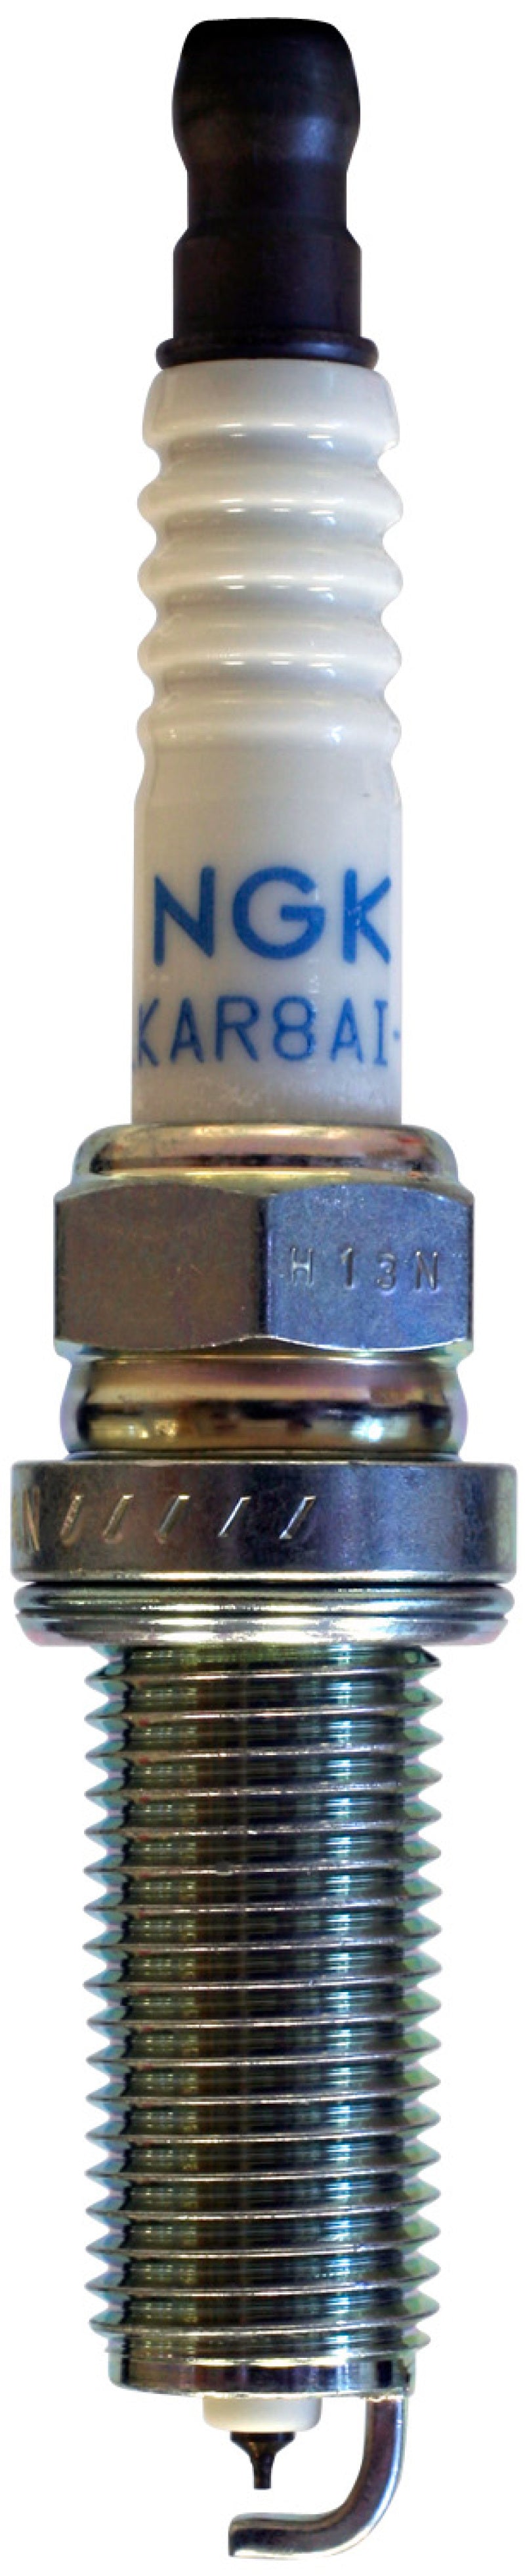 NGK Iridium/Platinum Spark Plug Box of 4 (LKAR8AI-9)